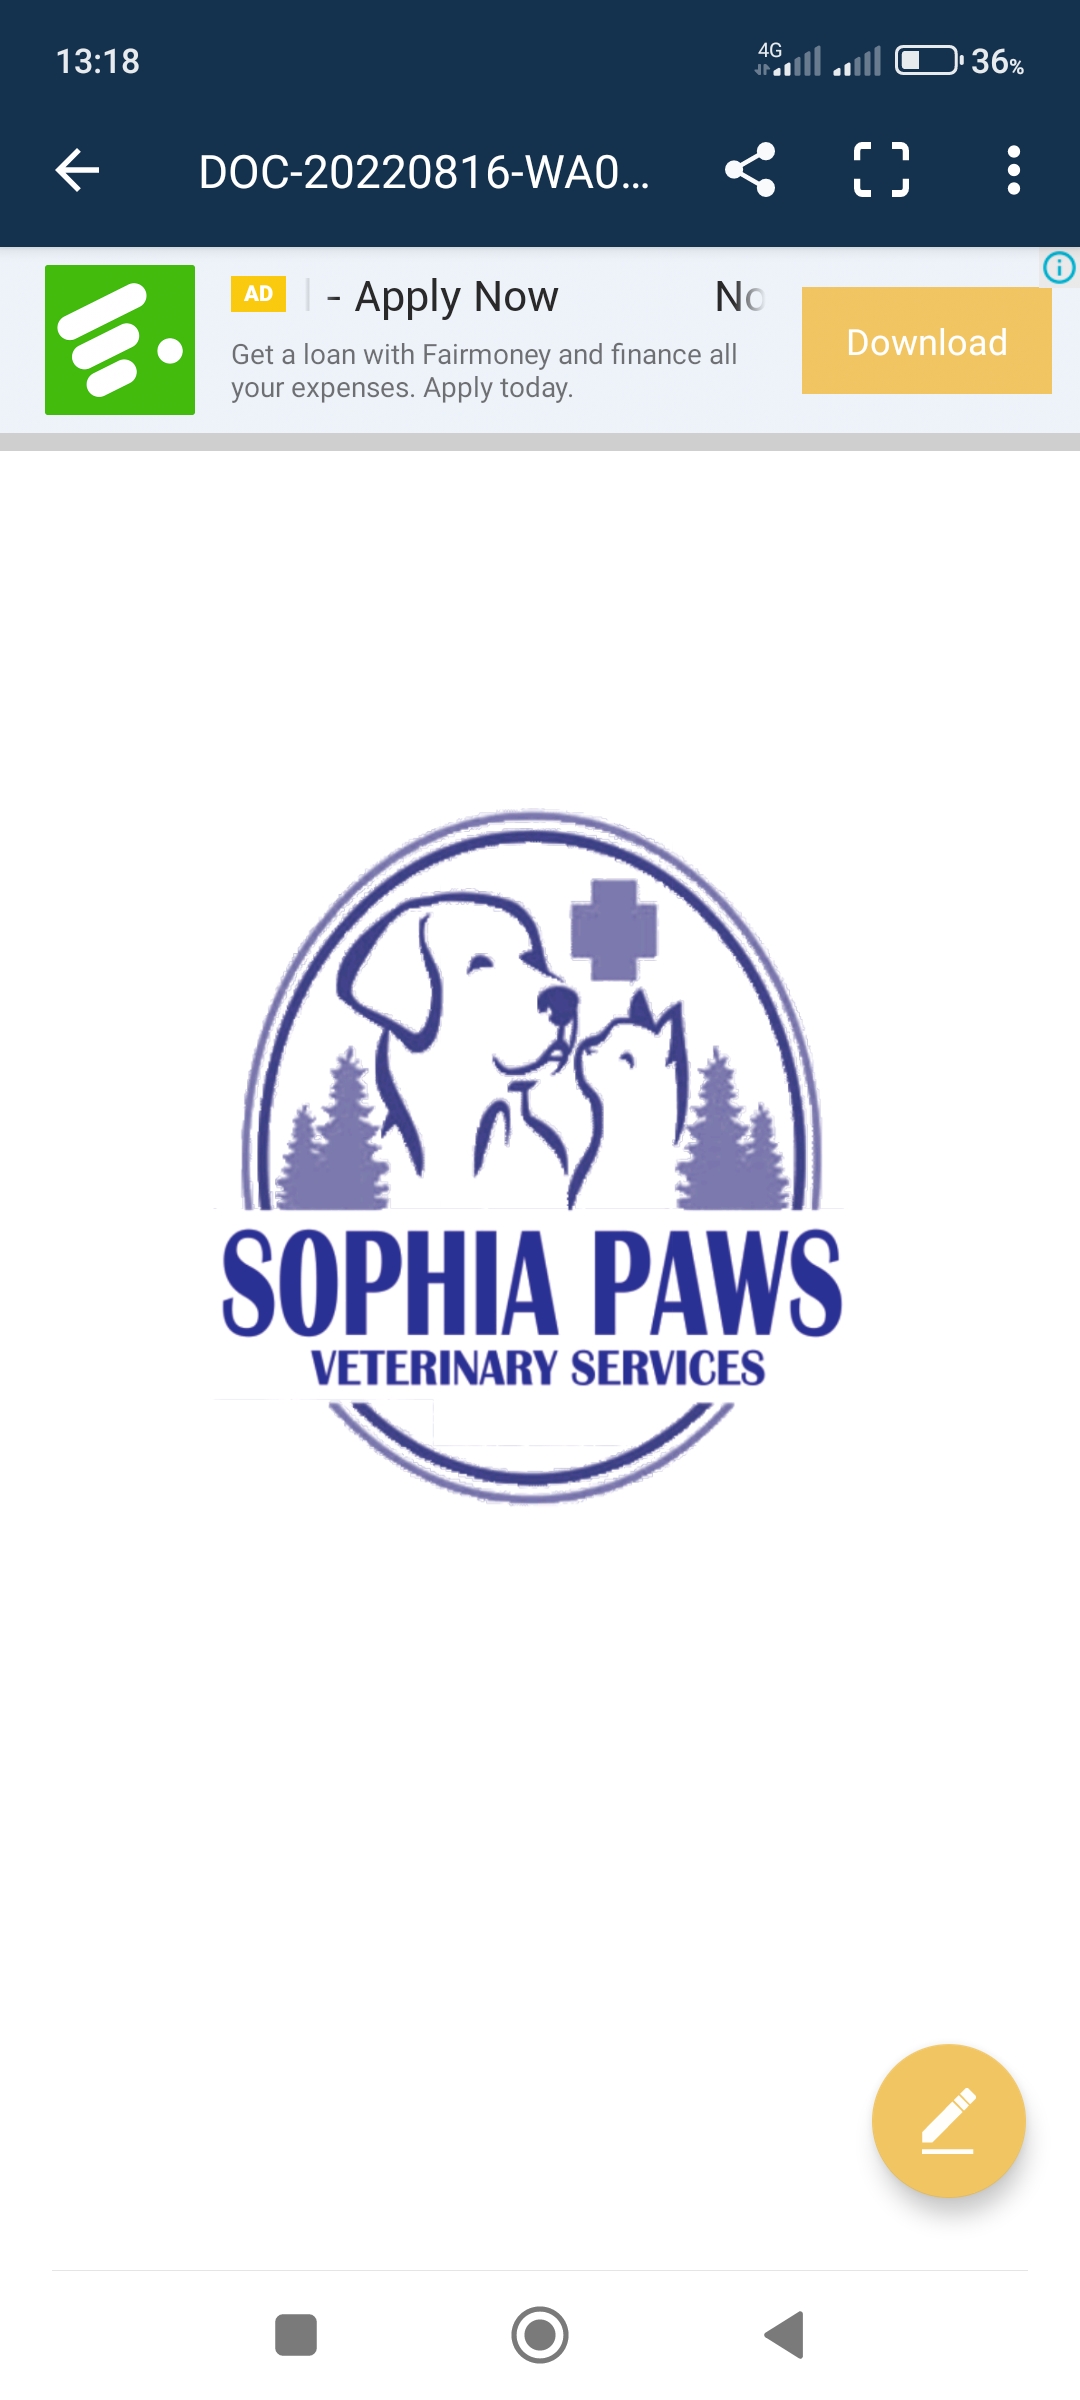 Sophia Paws Veterinary Services provider